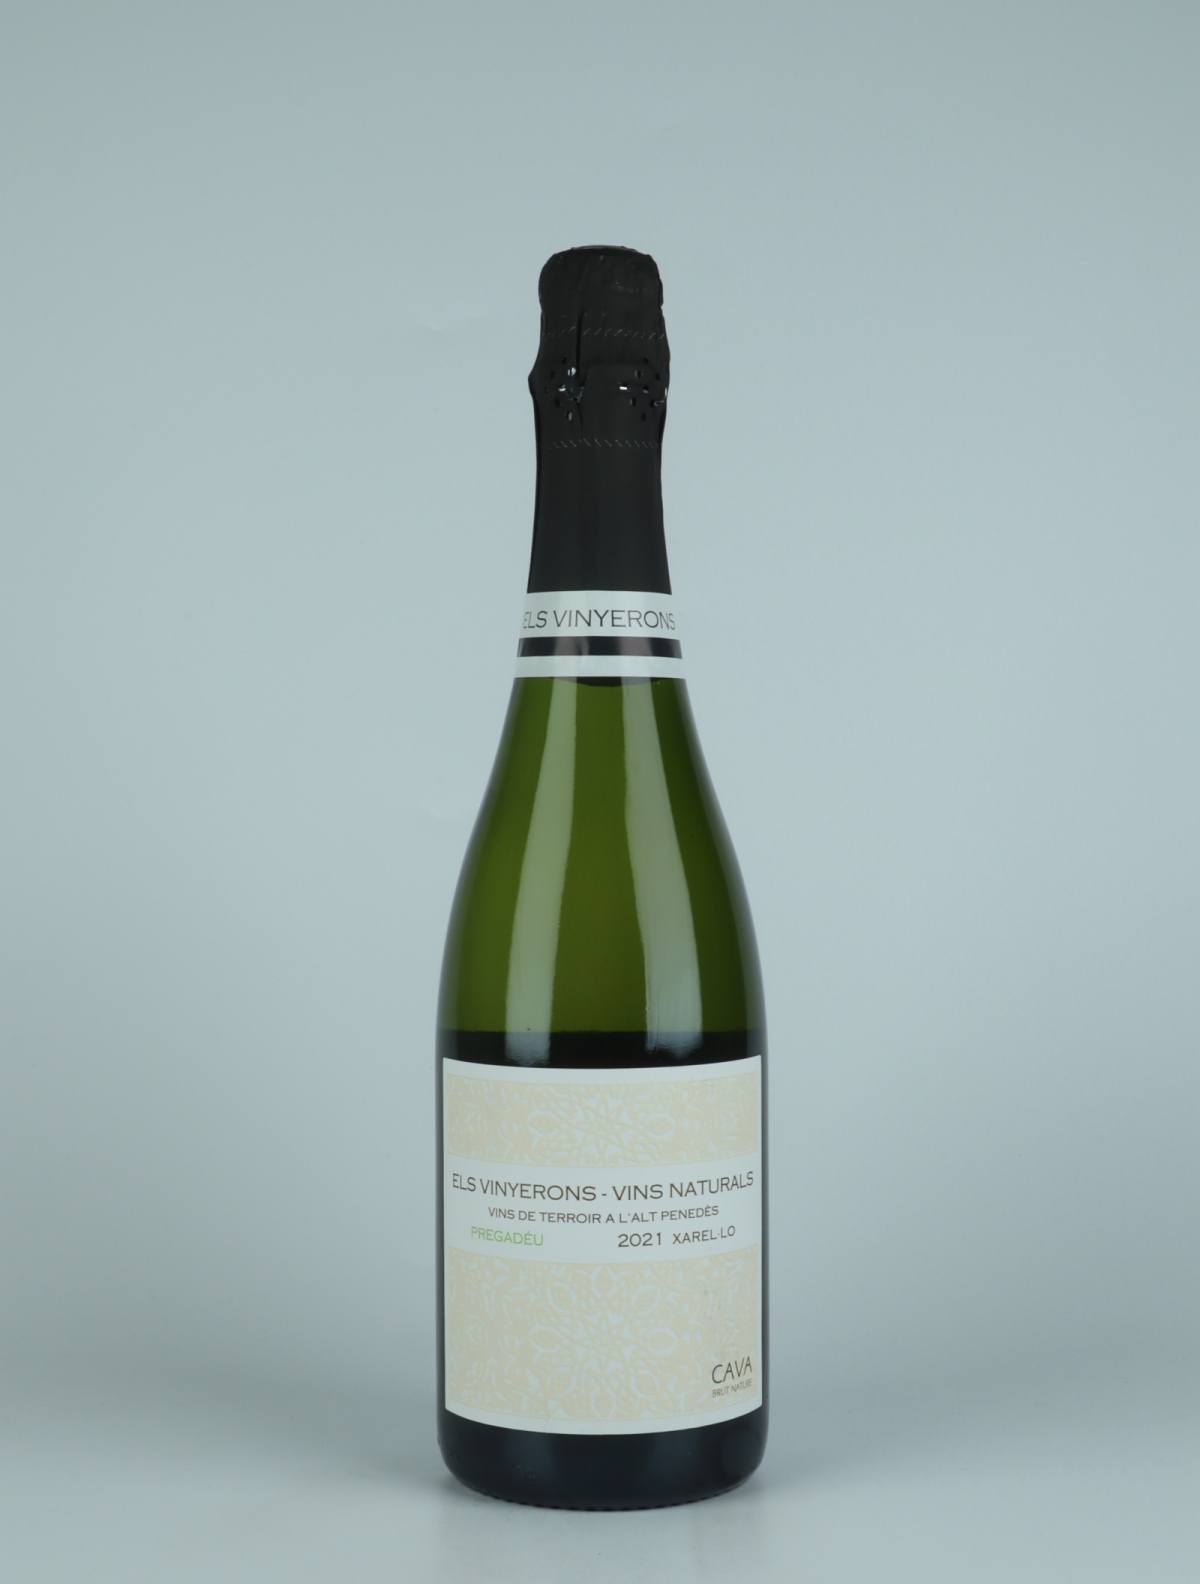 A bottle 2022 Cava - Pregadeu Sparkling from Els Vinyerons, Penedès in Spain